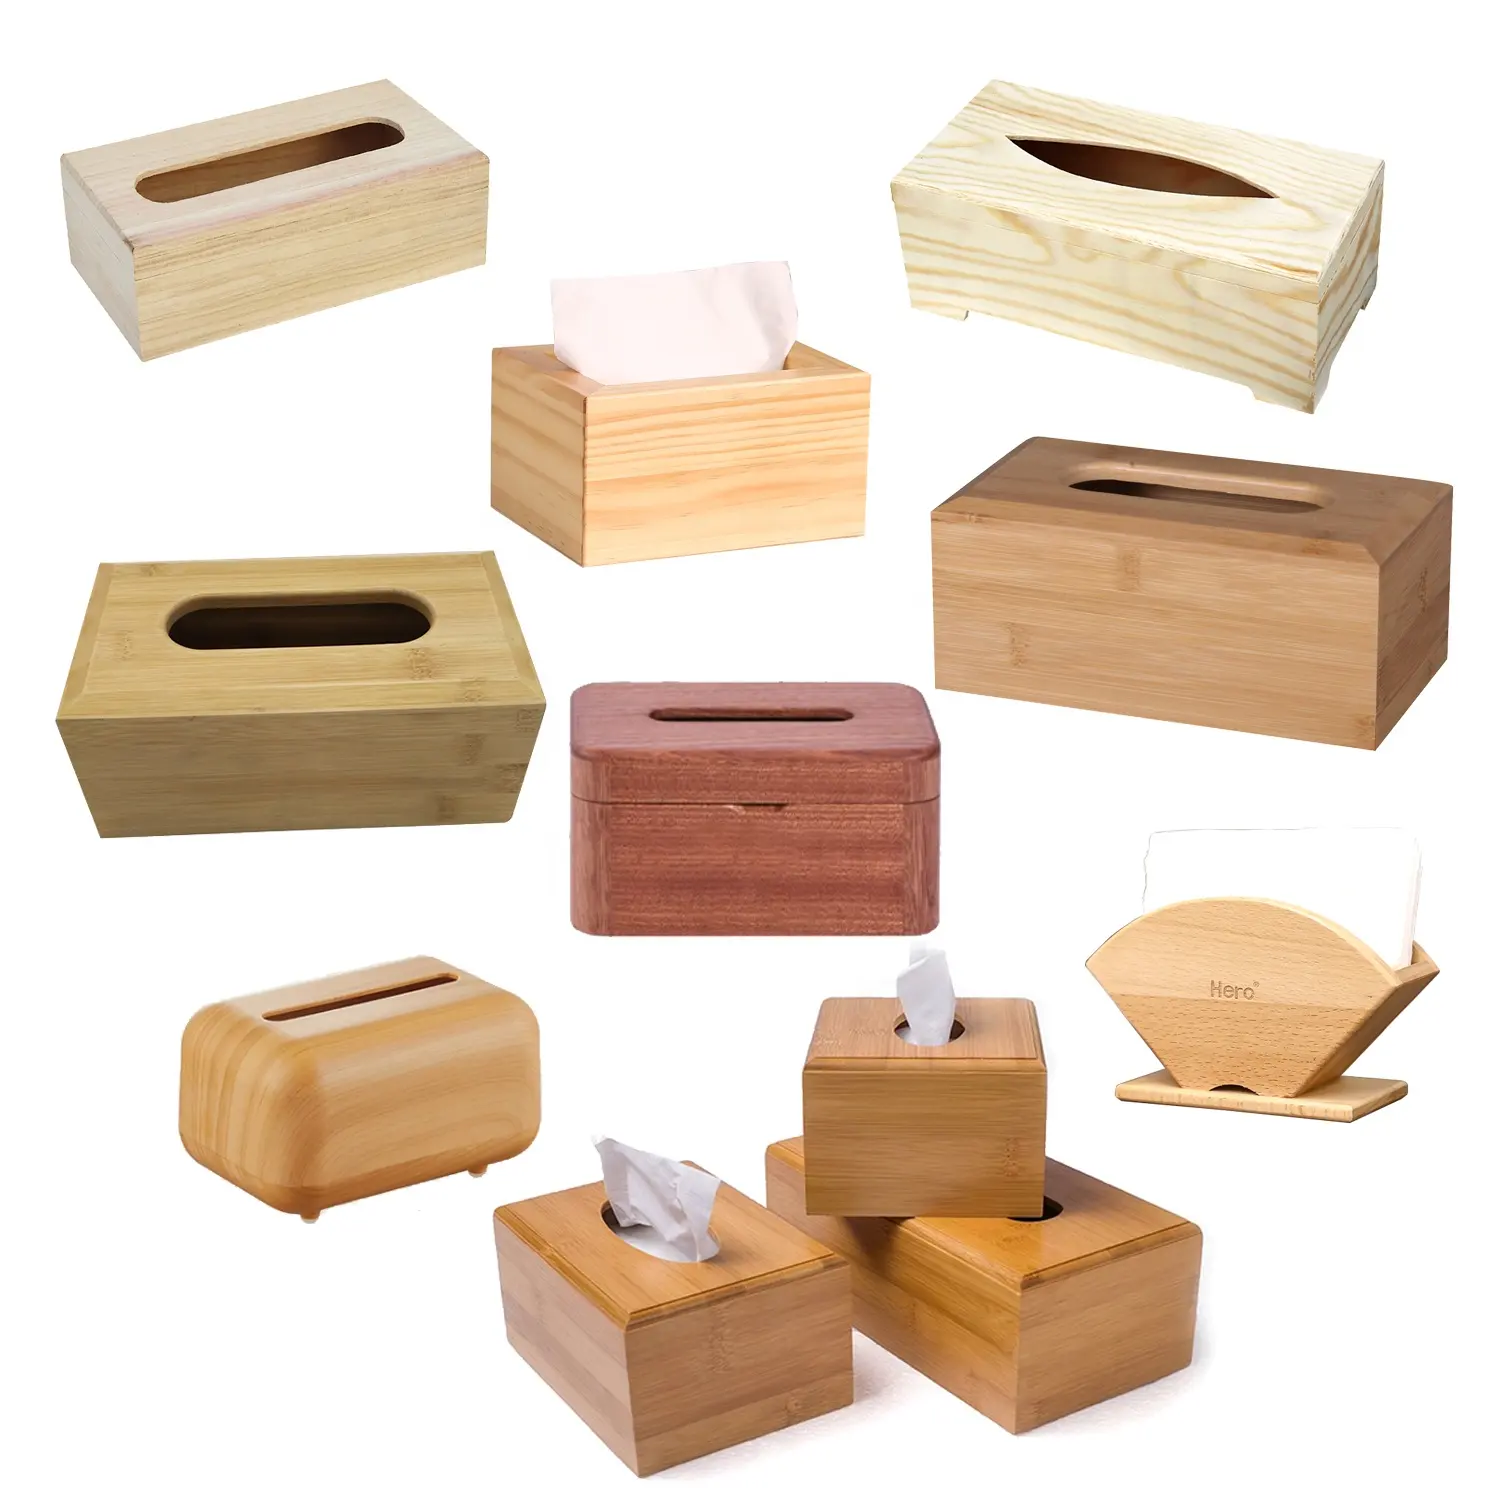 Toptan bitmemiş doğal renk bambu ahşap kağıt saklama kutusu organizatör ahşap doku kutu tutucu mutfak banyo için